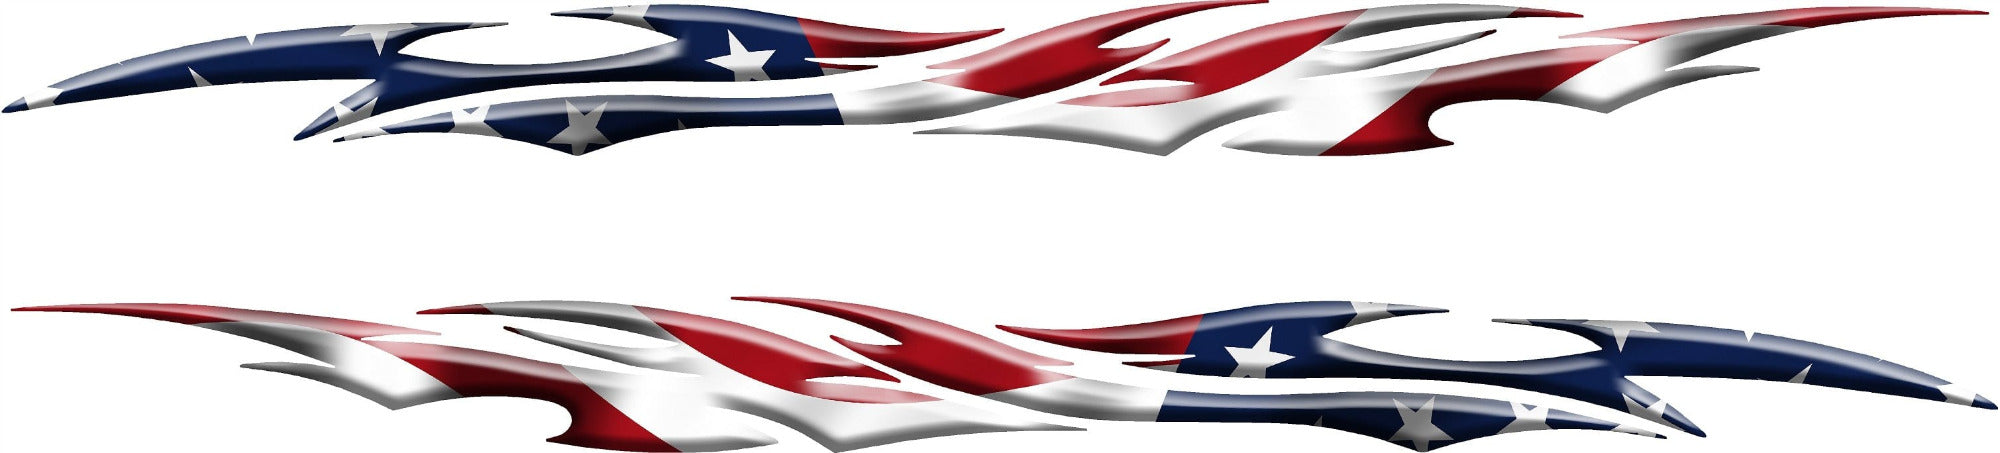 american flag vinyl stripes auto decals kit